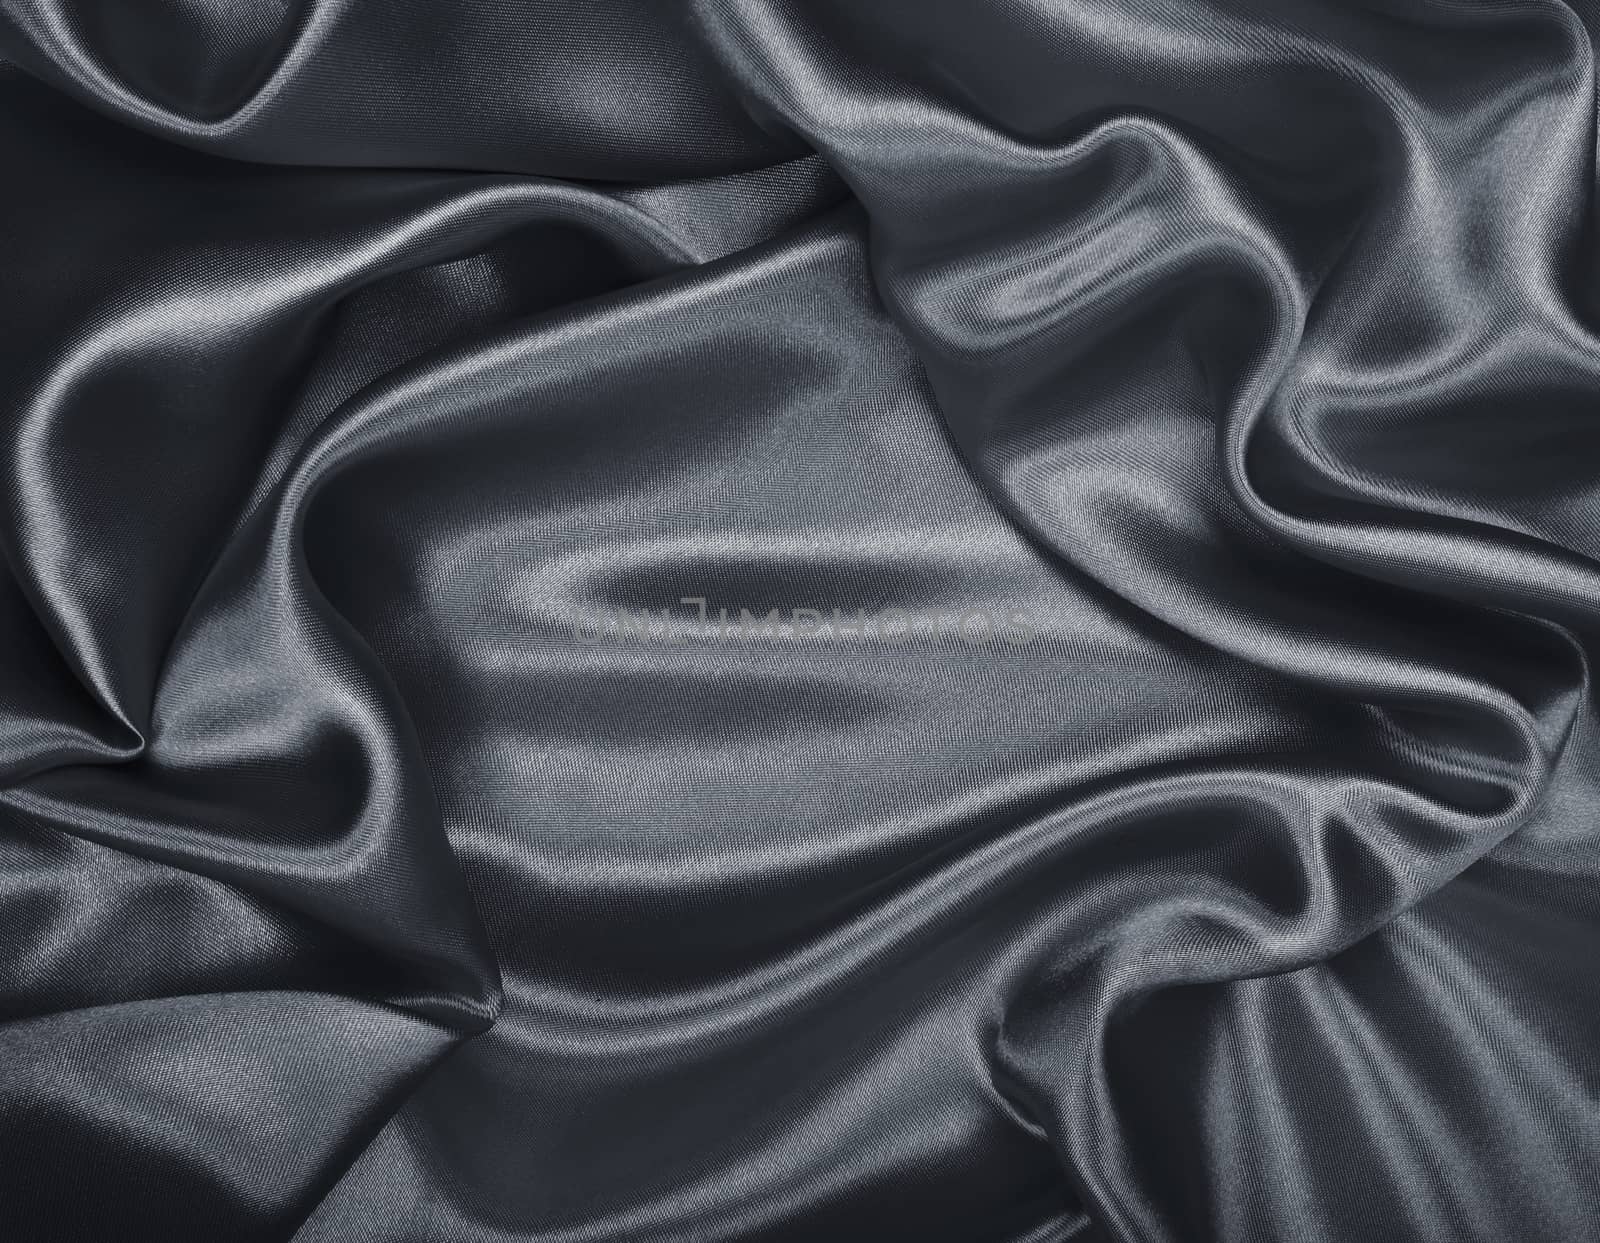 Smooth elegant grey silk as background  by oxanatravel